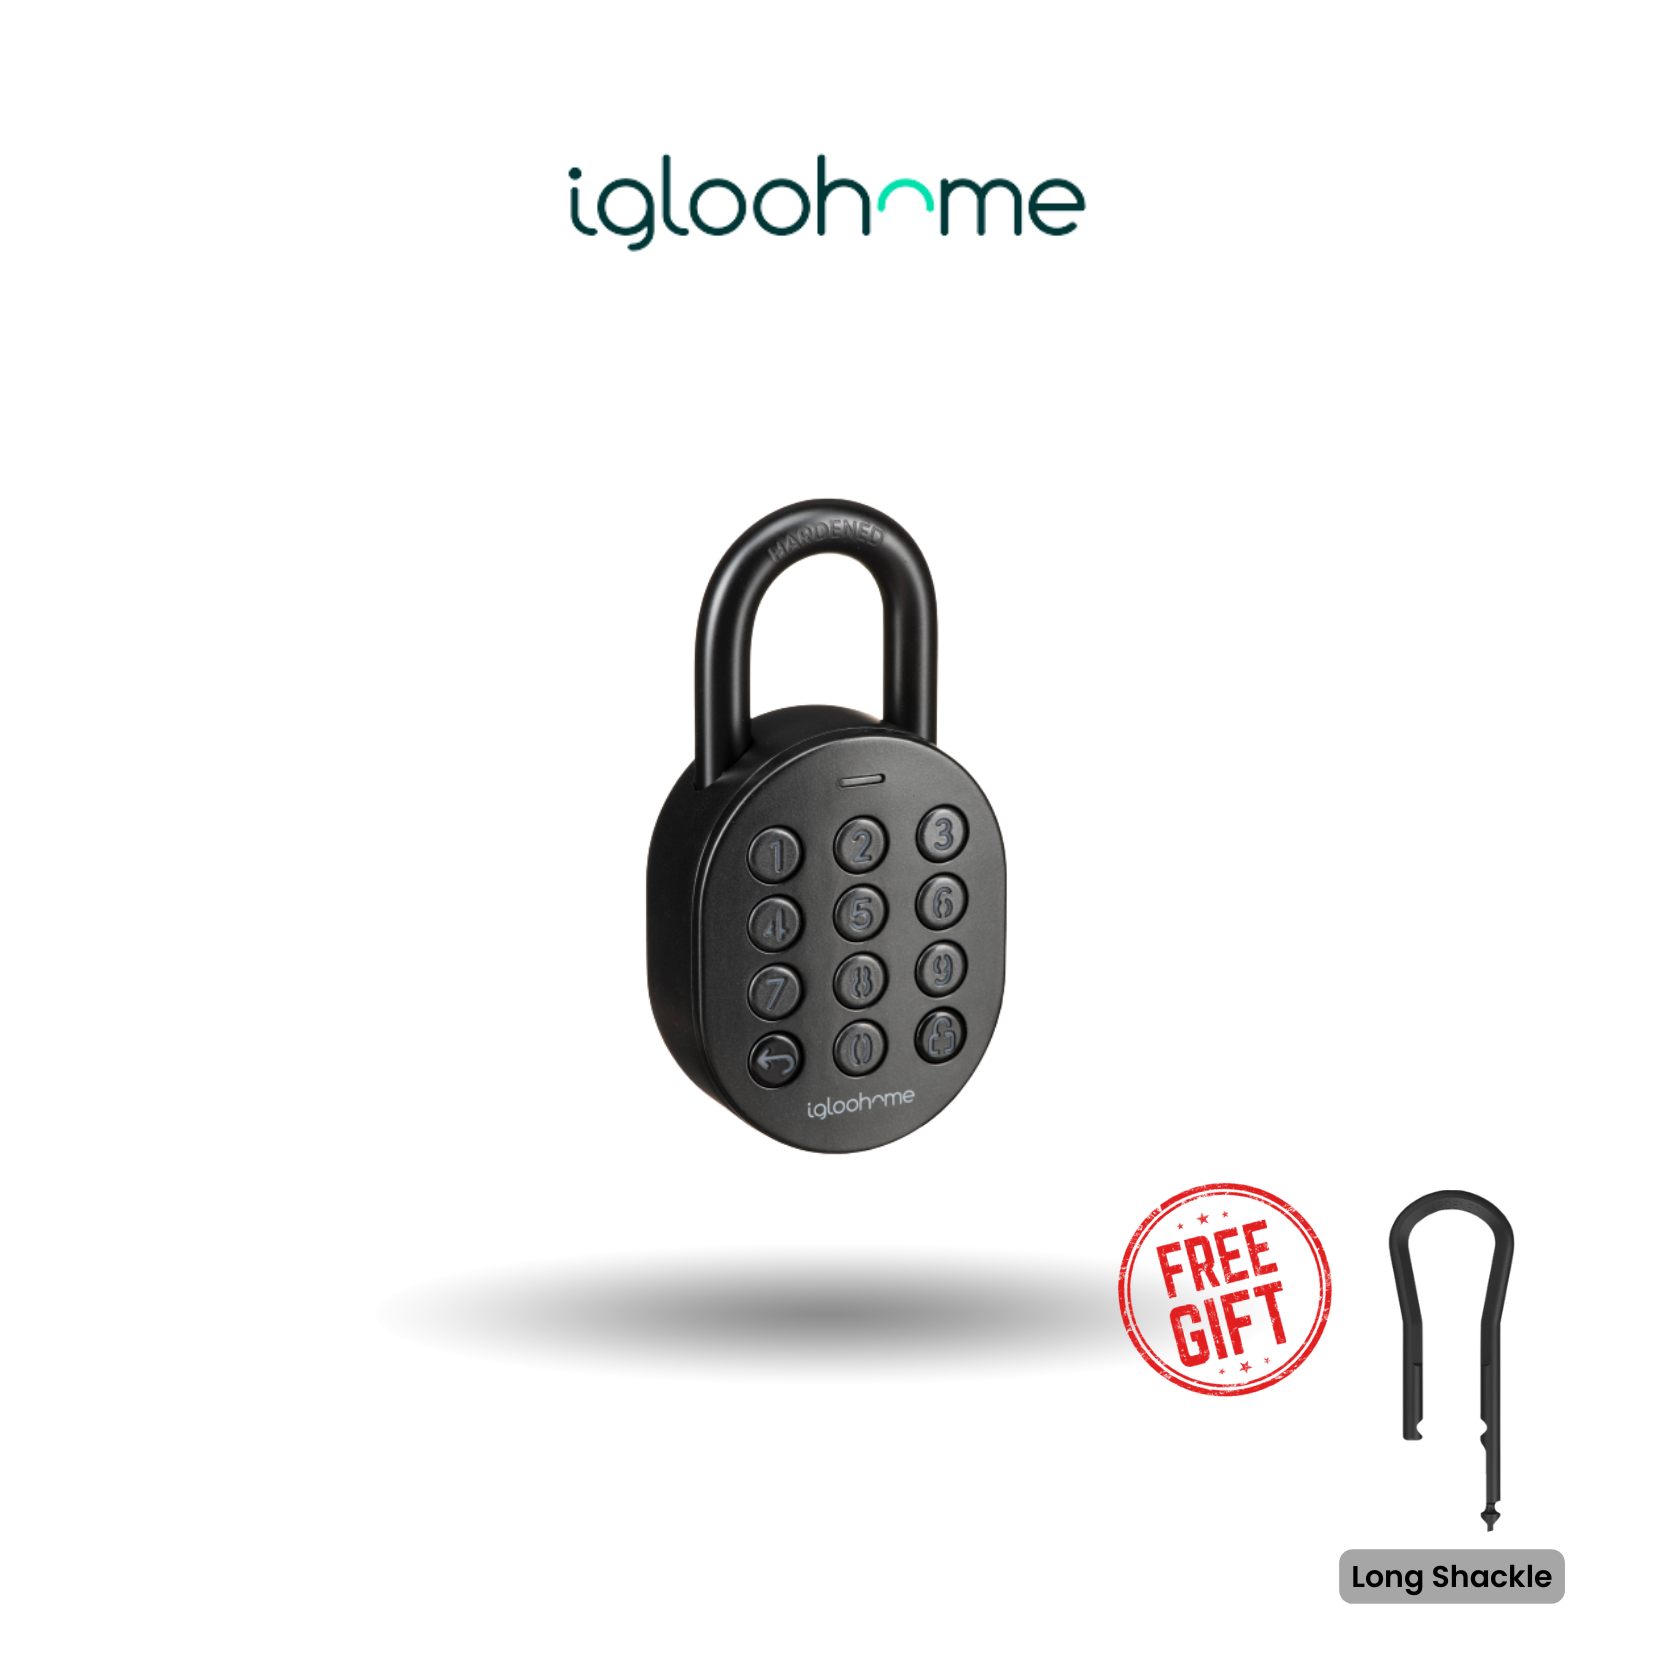 Igloohome lock